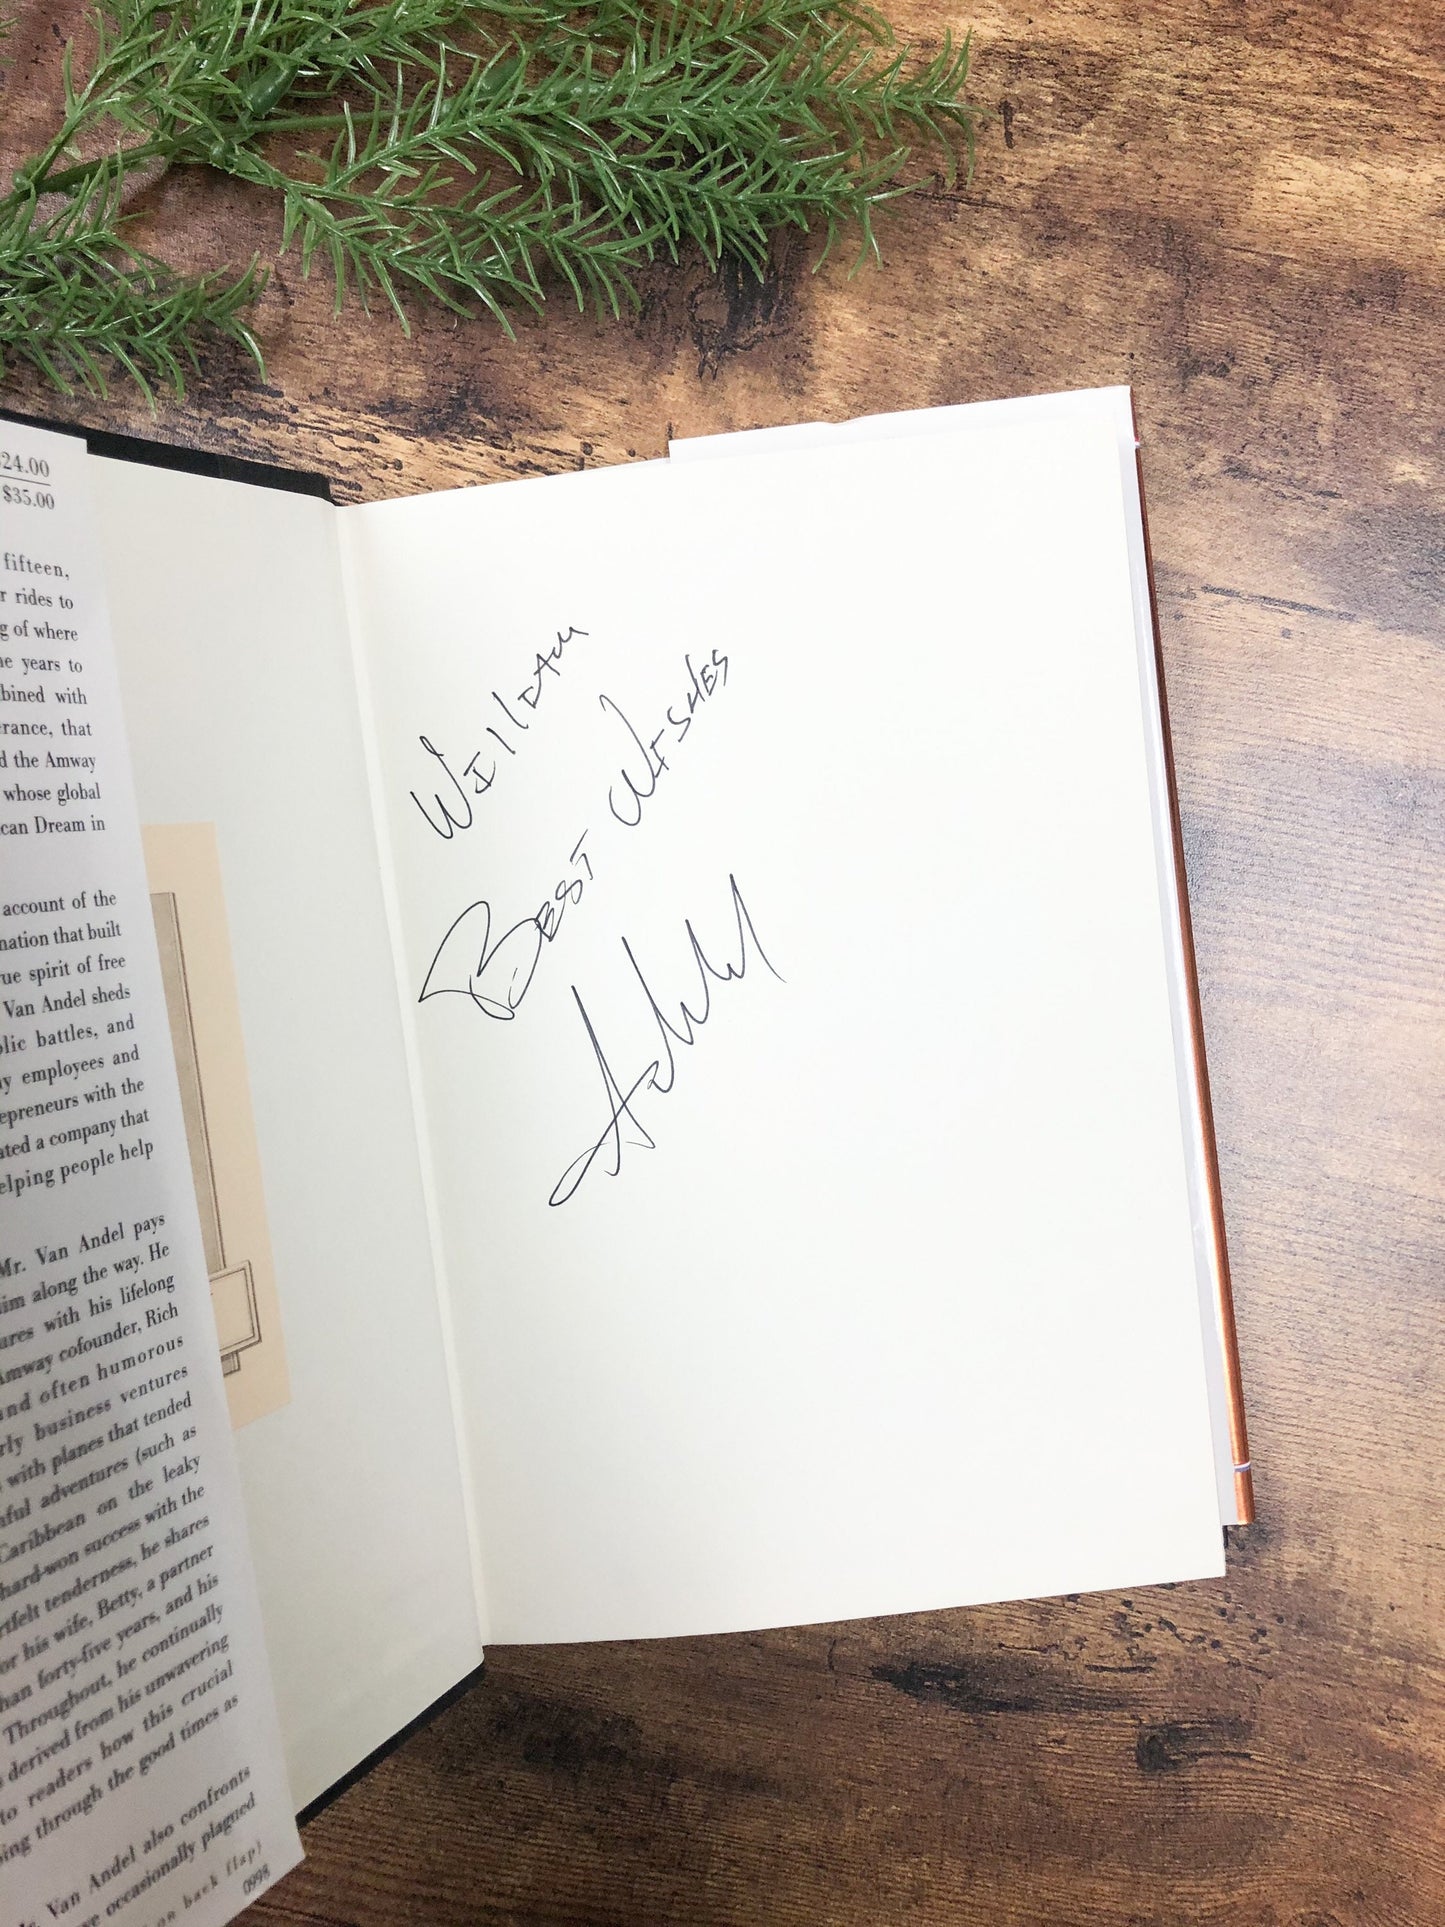 Signed Book by Jay Van Andel / An Enterprising Life